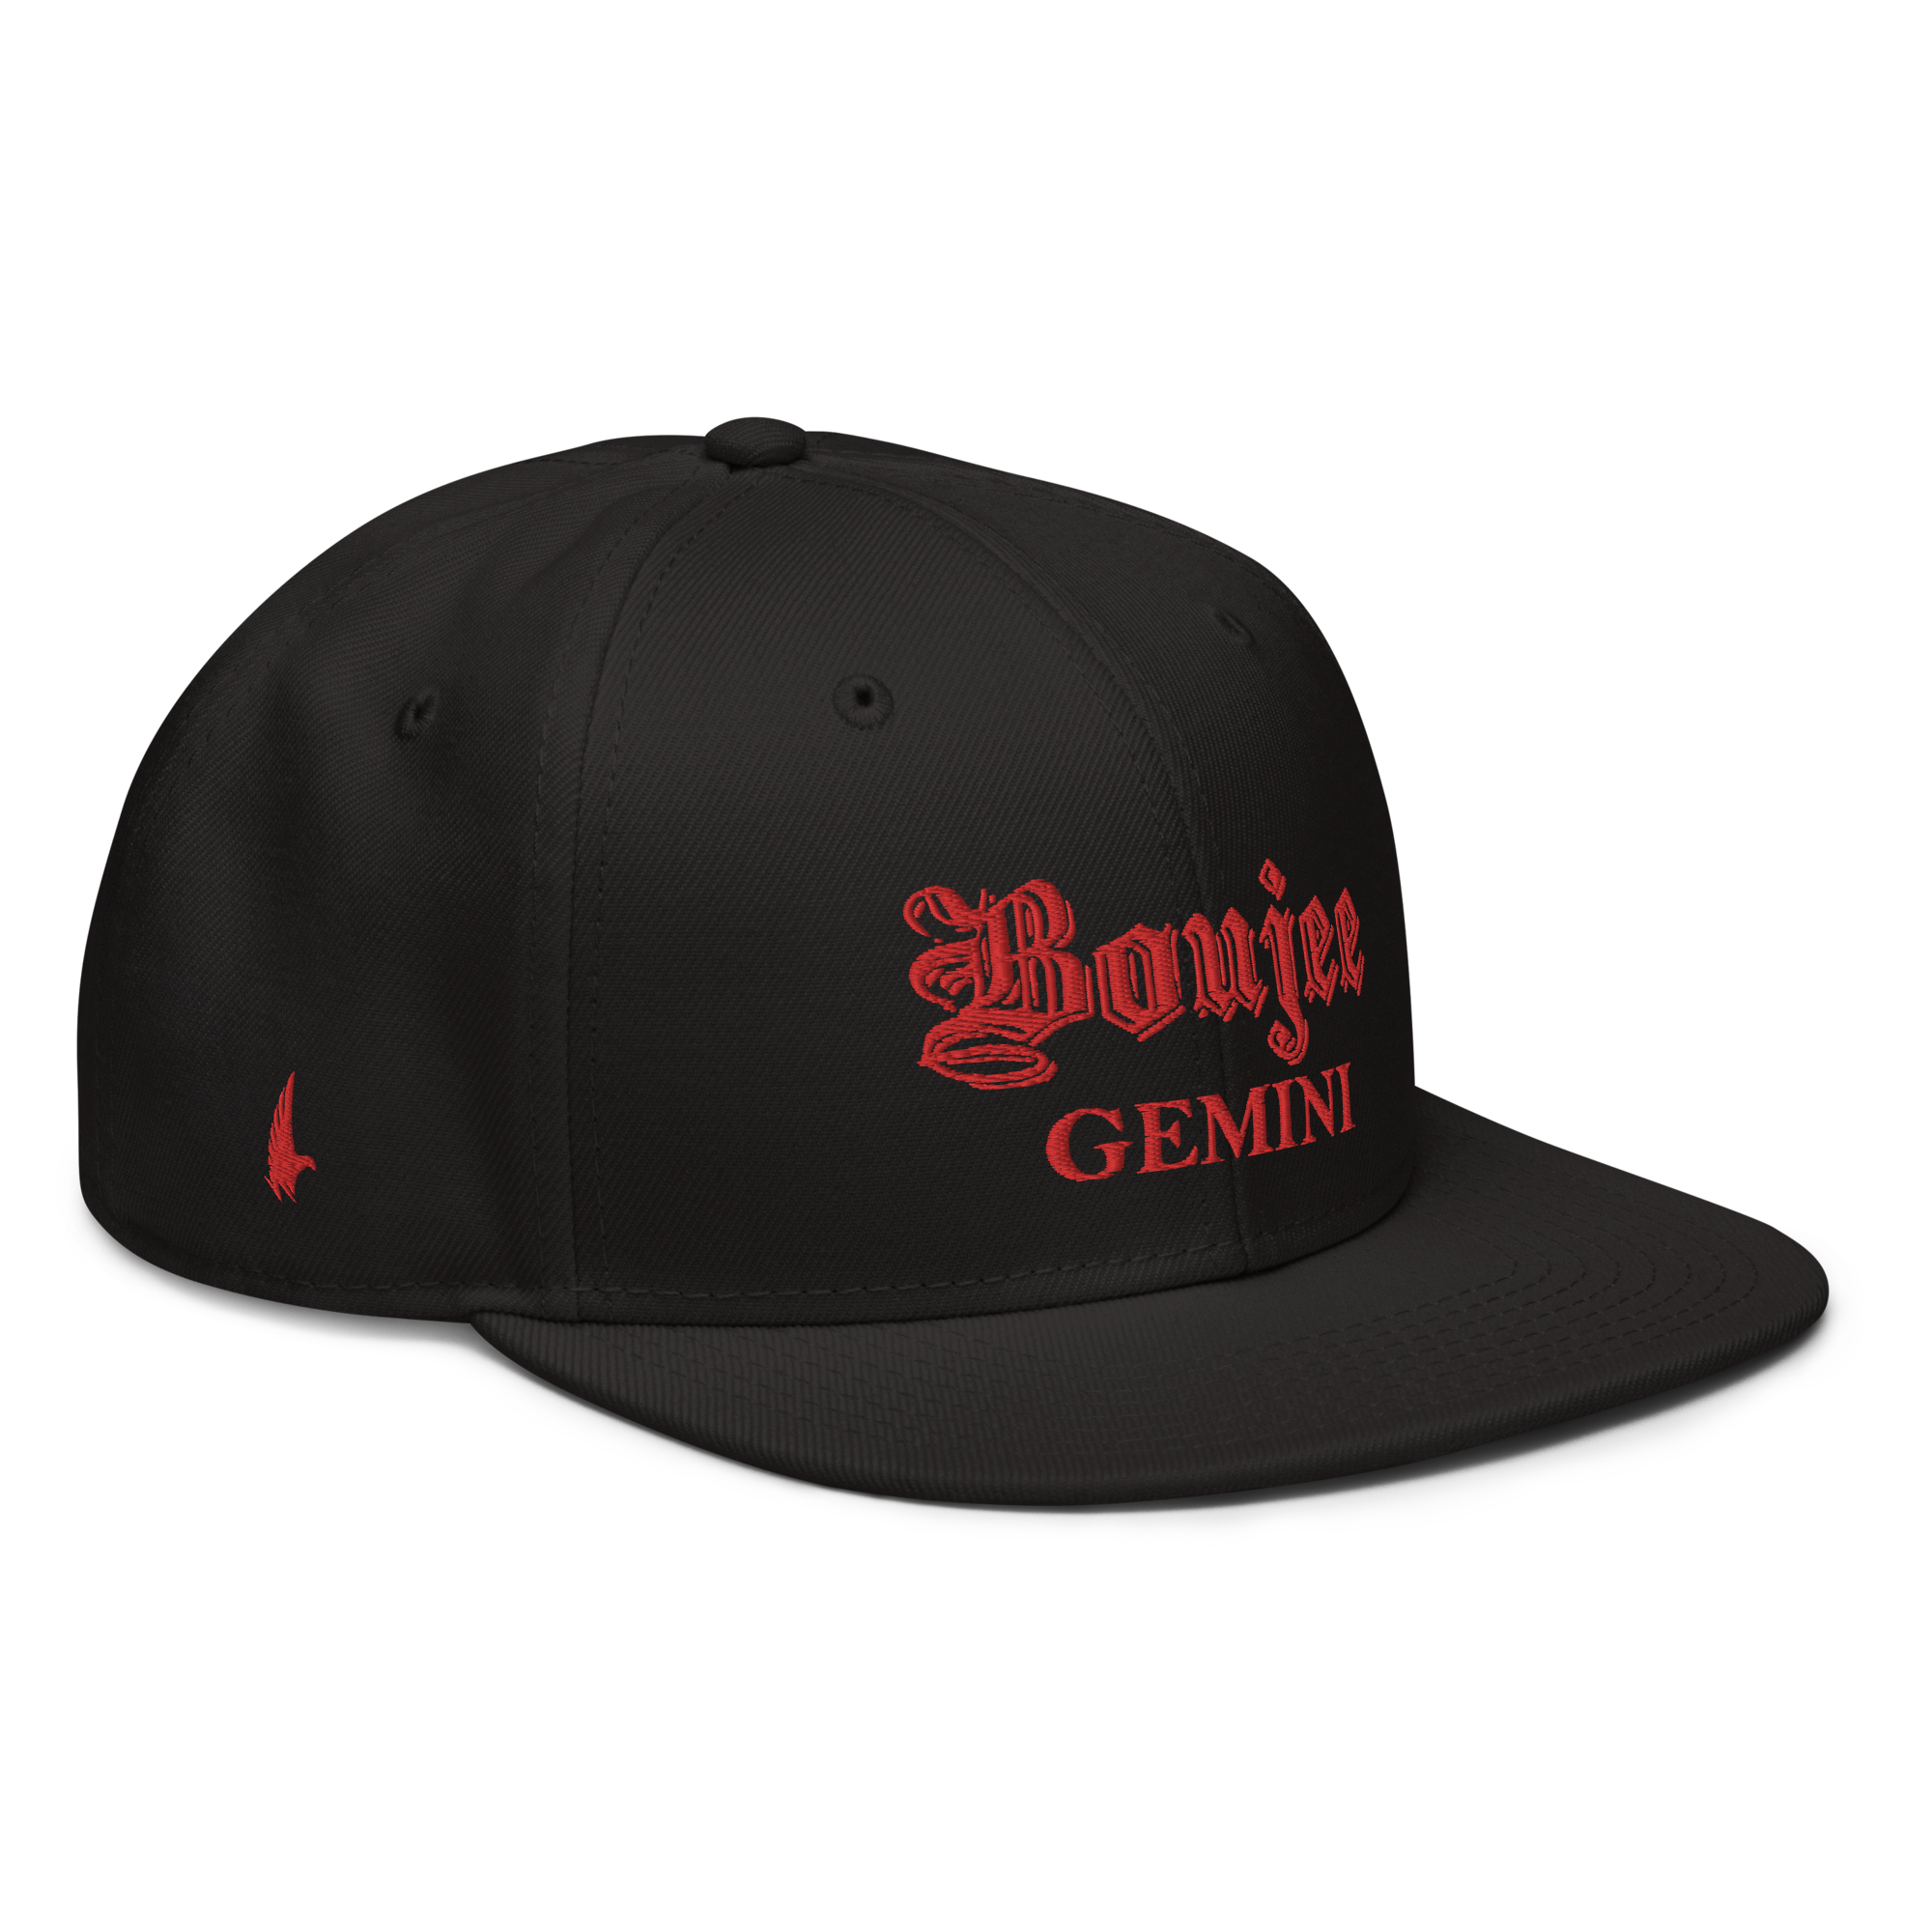 Boujee Gemini Snapback Hat - Black/Red - Loyalty Vibes